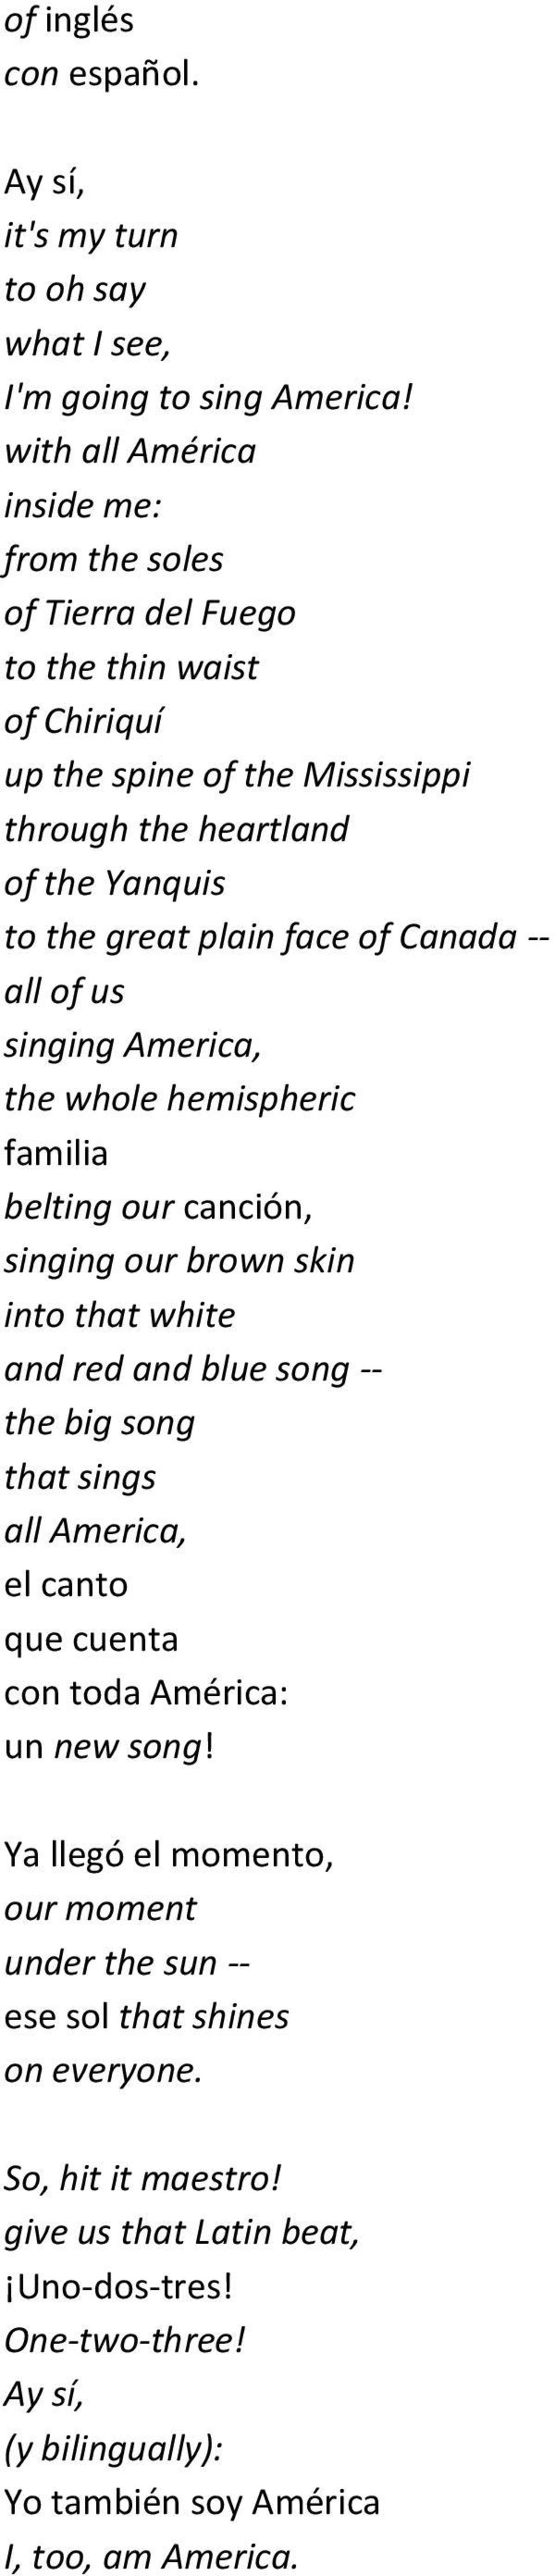 i too sing america pdf